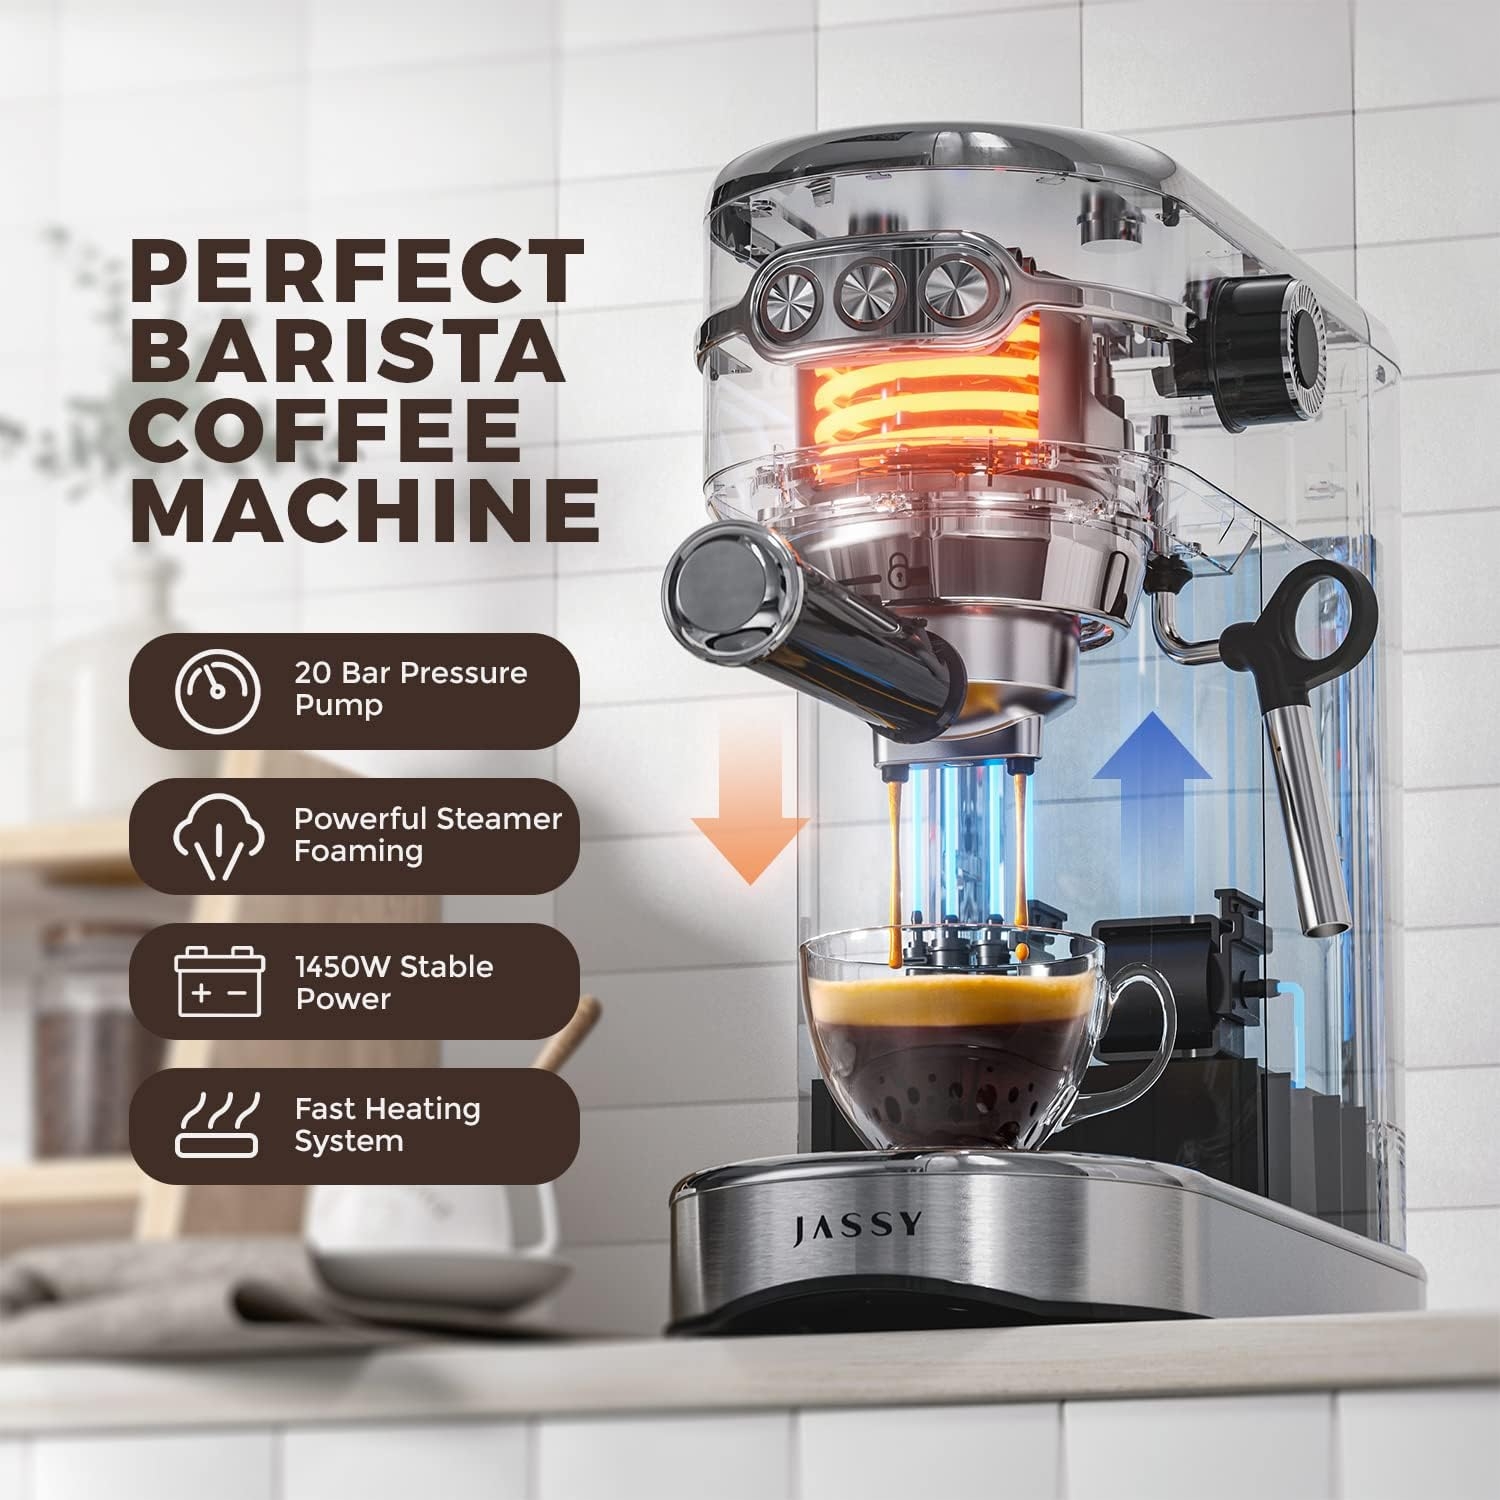 JASSY Espresso Maker 20 Bar Cappuccino Coffee Machine with Milk